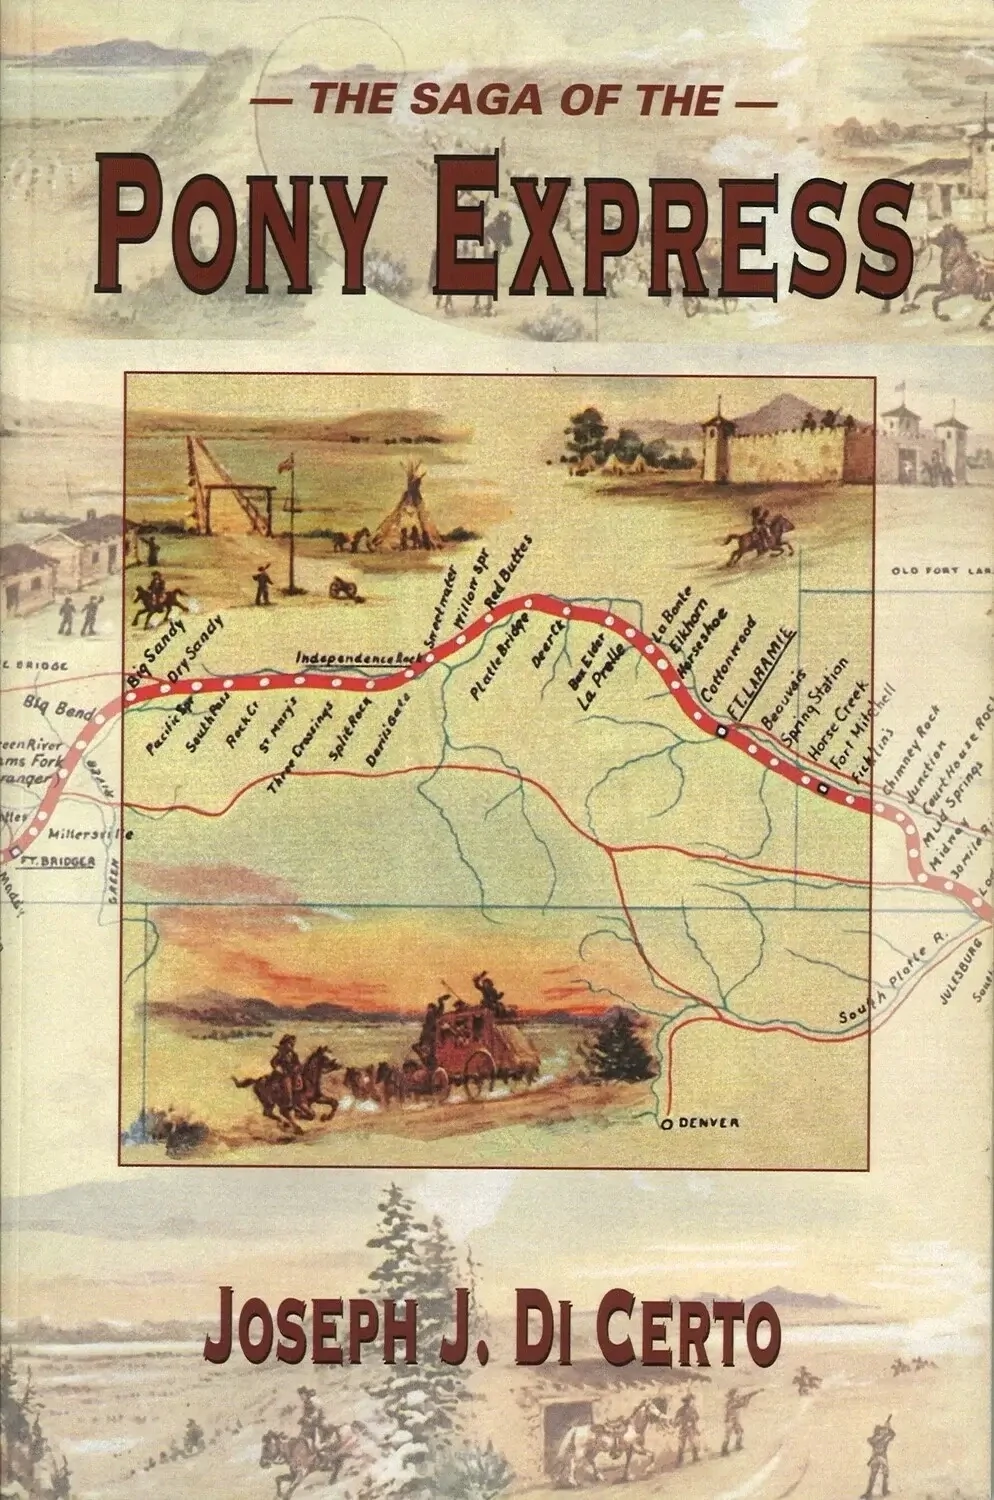 The Saga of the Pony Express by Joseph J. Di Certo